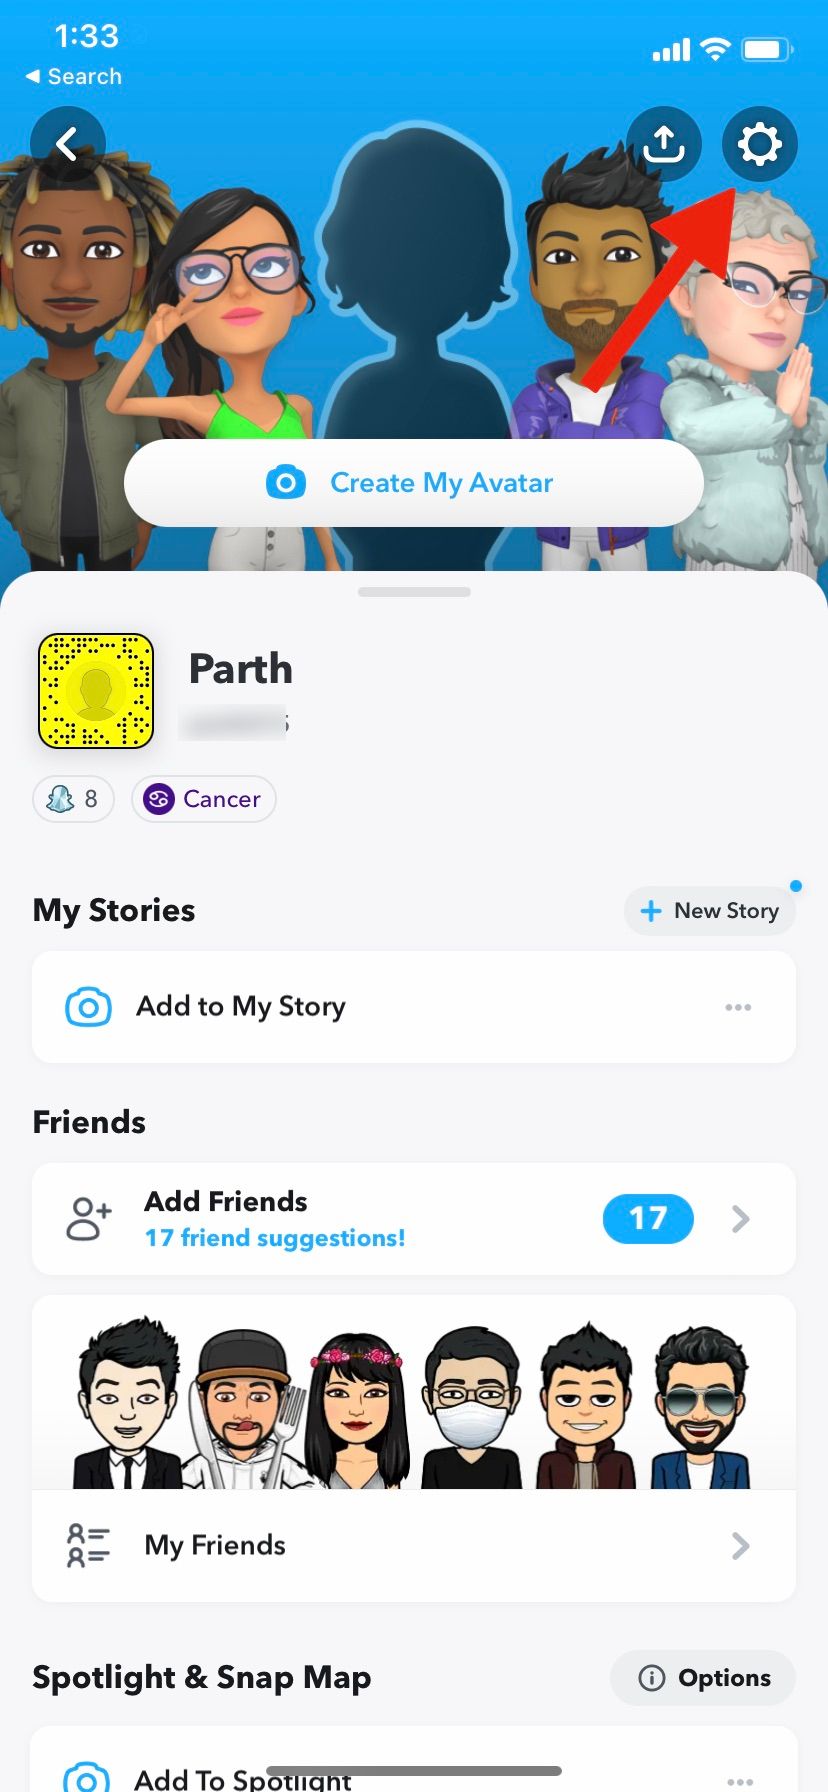 Screenshot of Snapchat settings